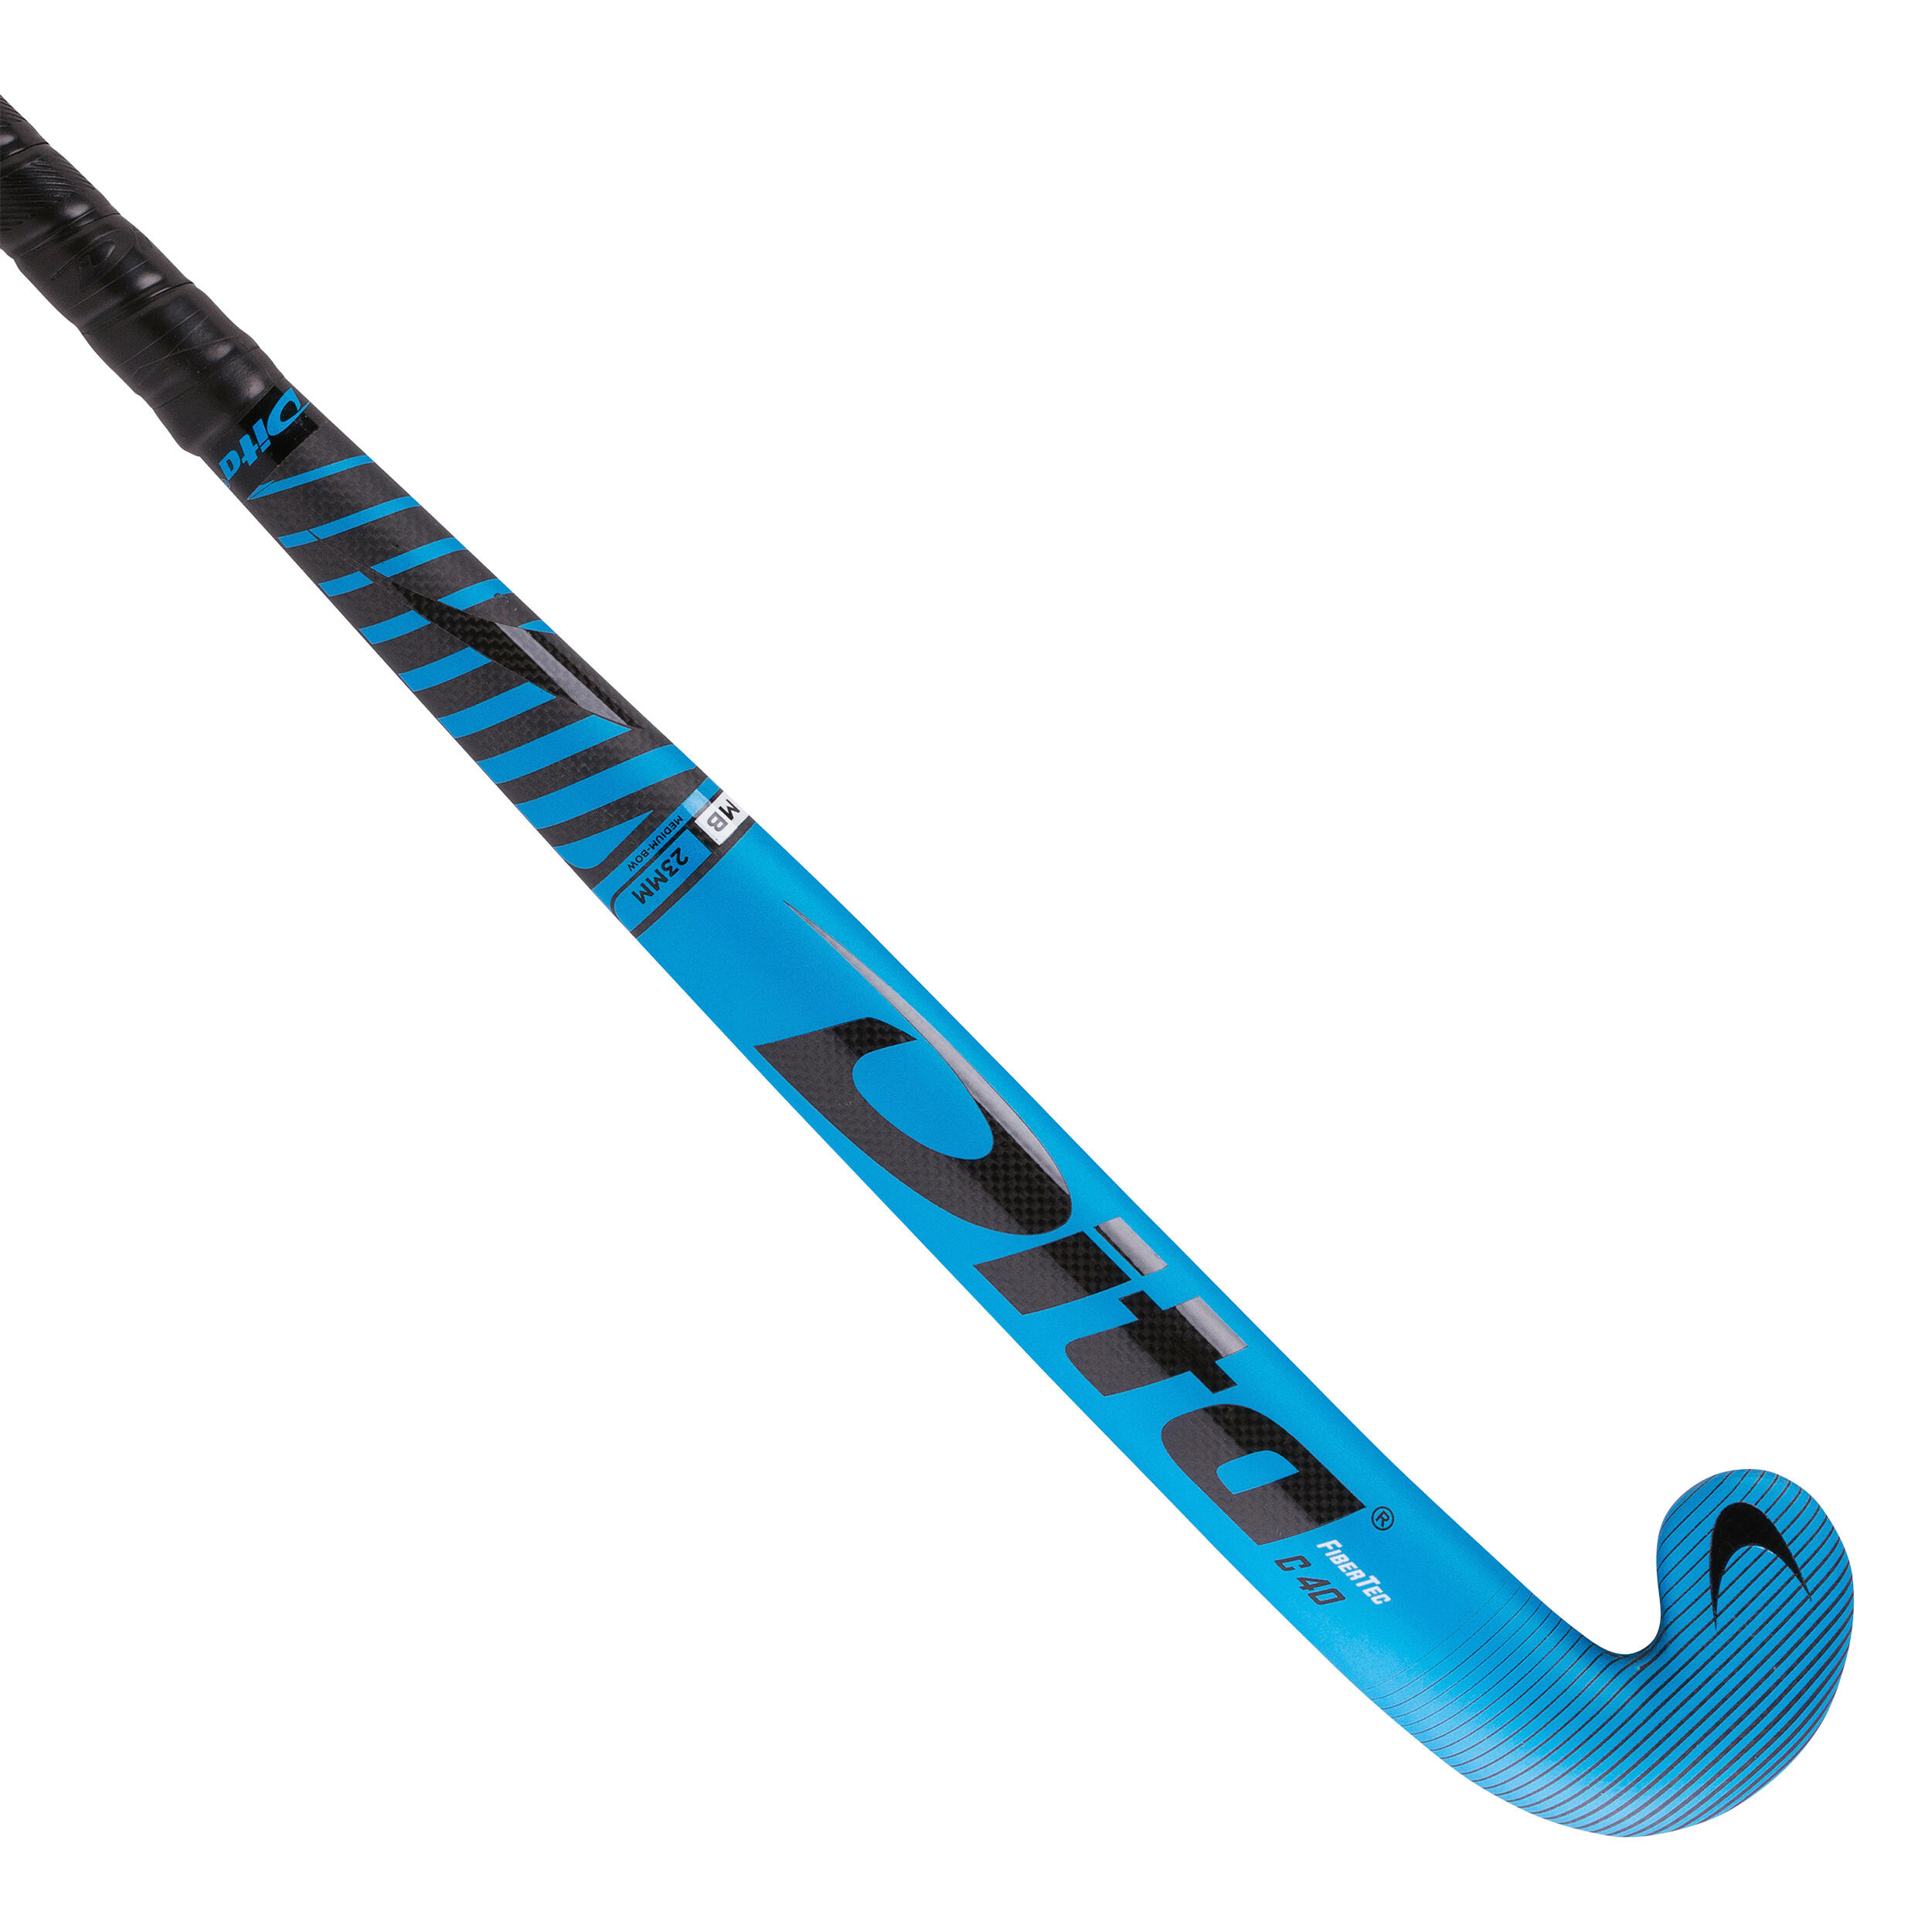 DITA Intermediate 40% Carbon Mid Bow Field Hockey Stick FiberTecC40 - Blue